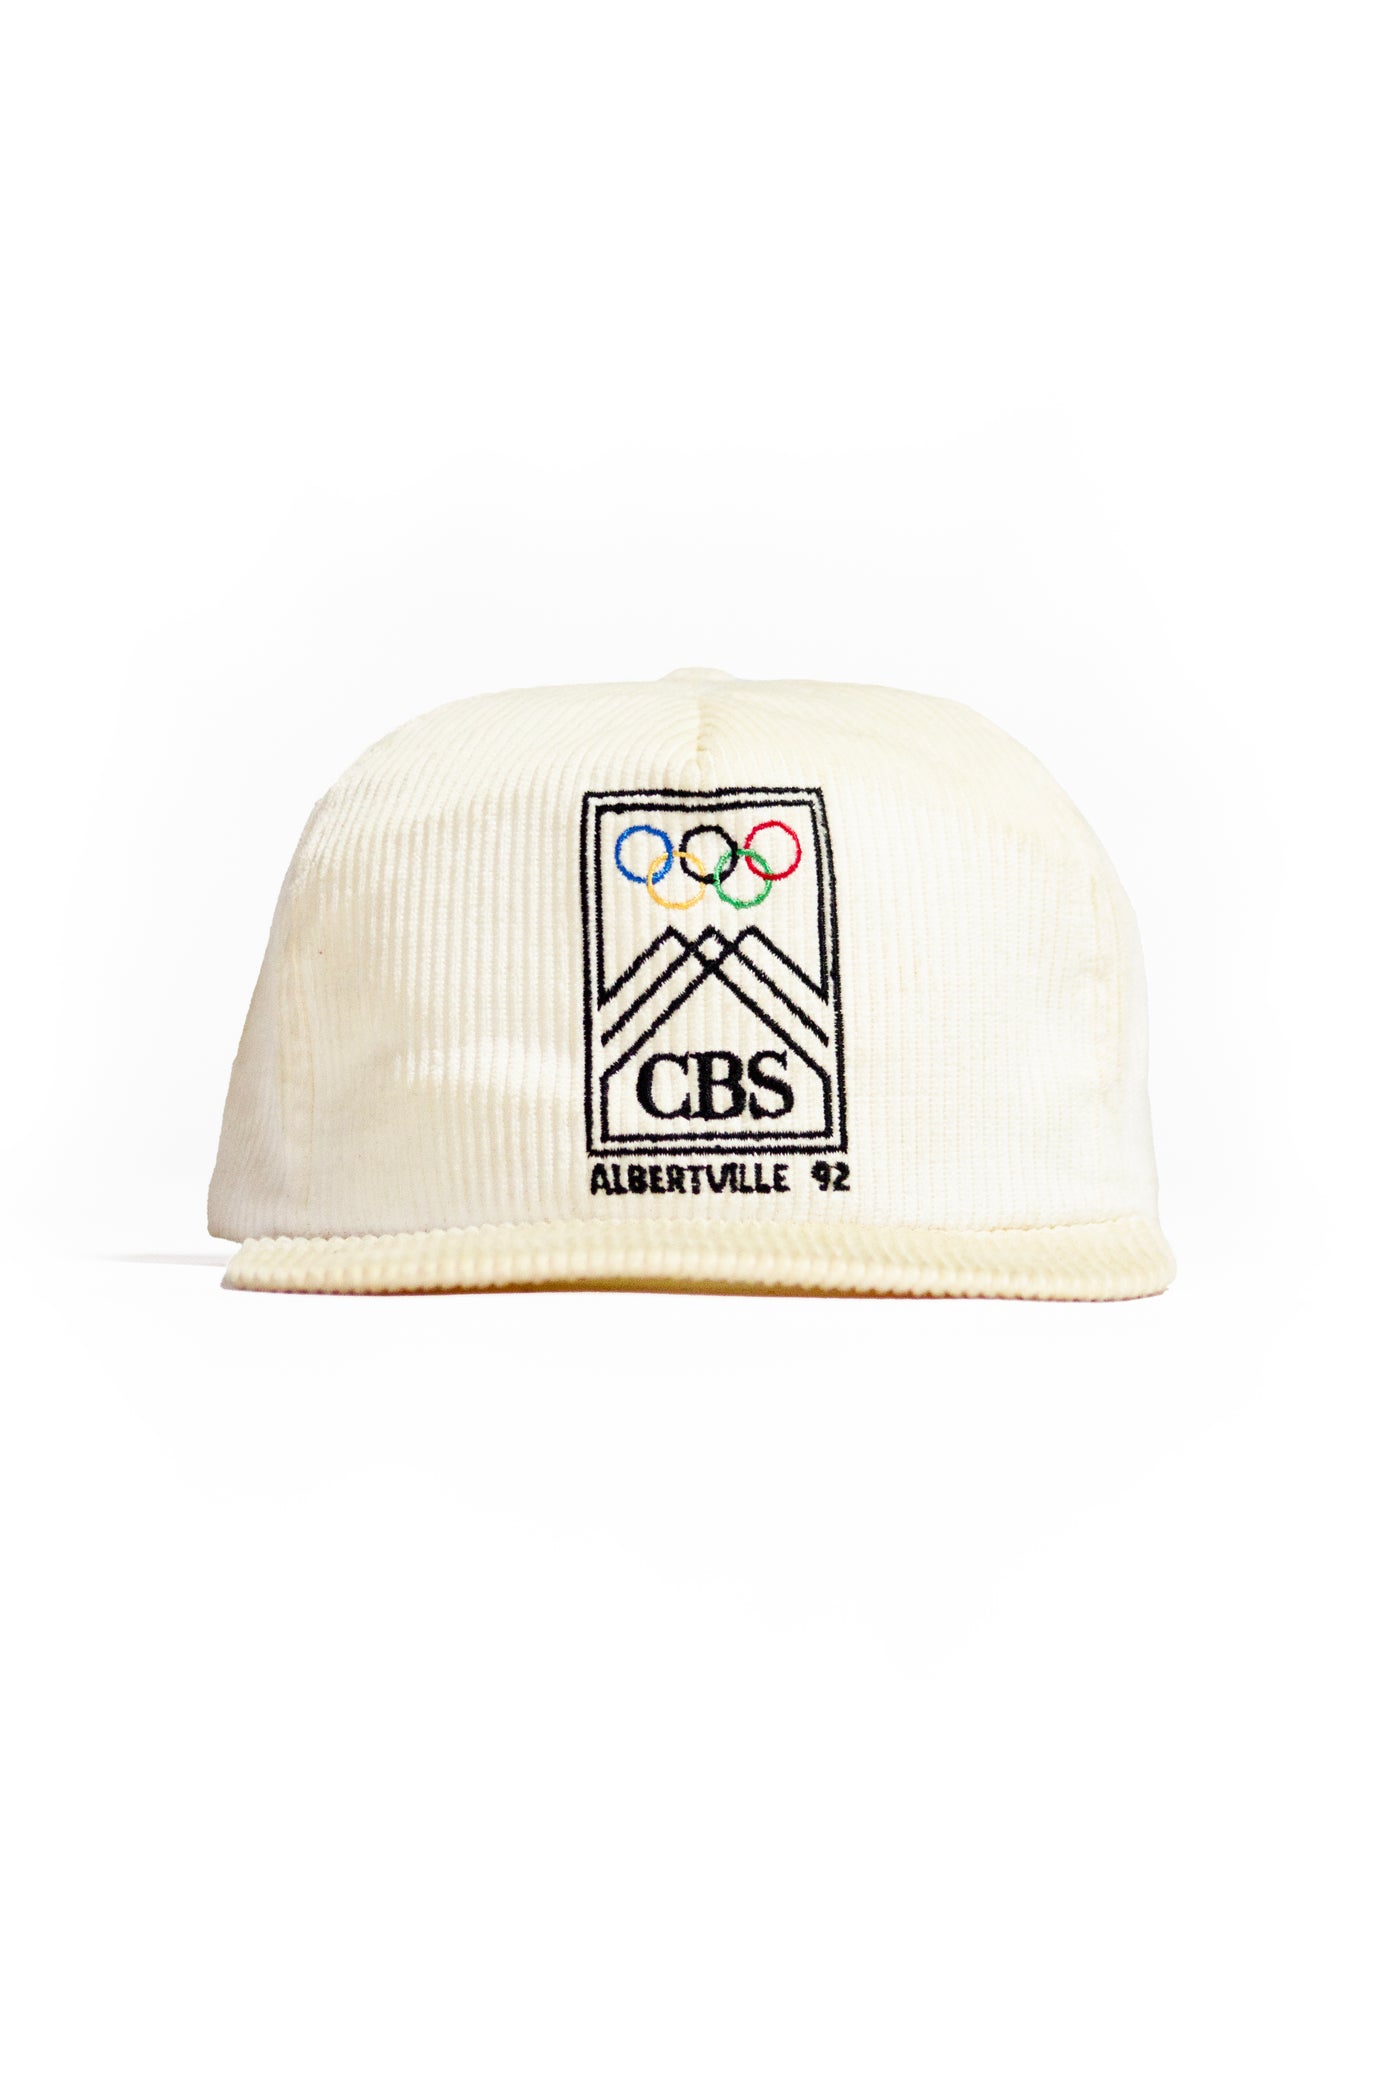 Vintage 1992 CBS Albertville Olympic Corduroy Snapback